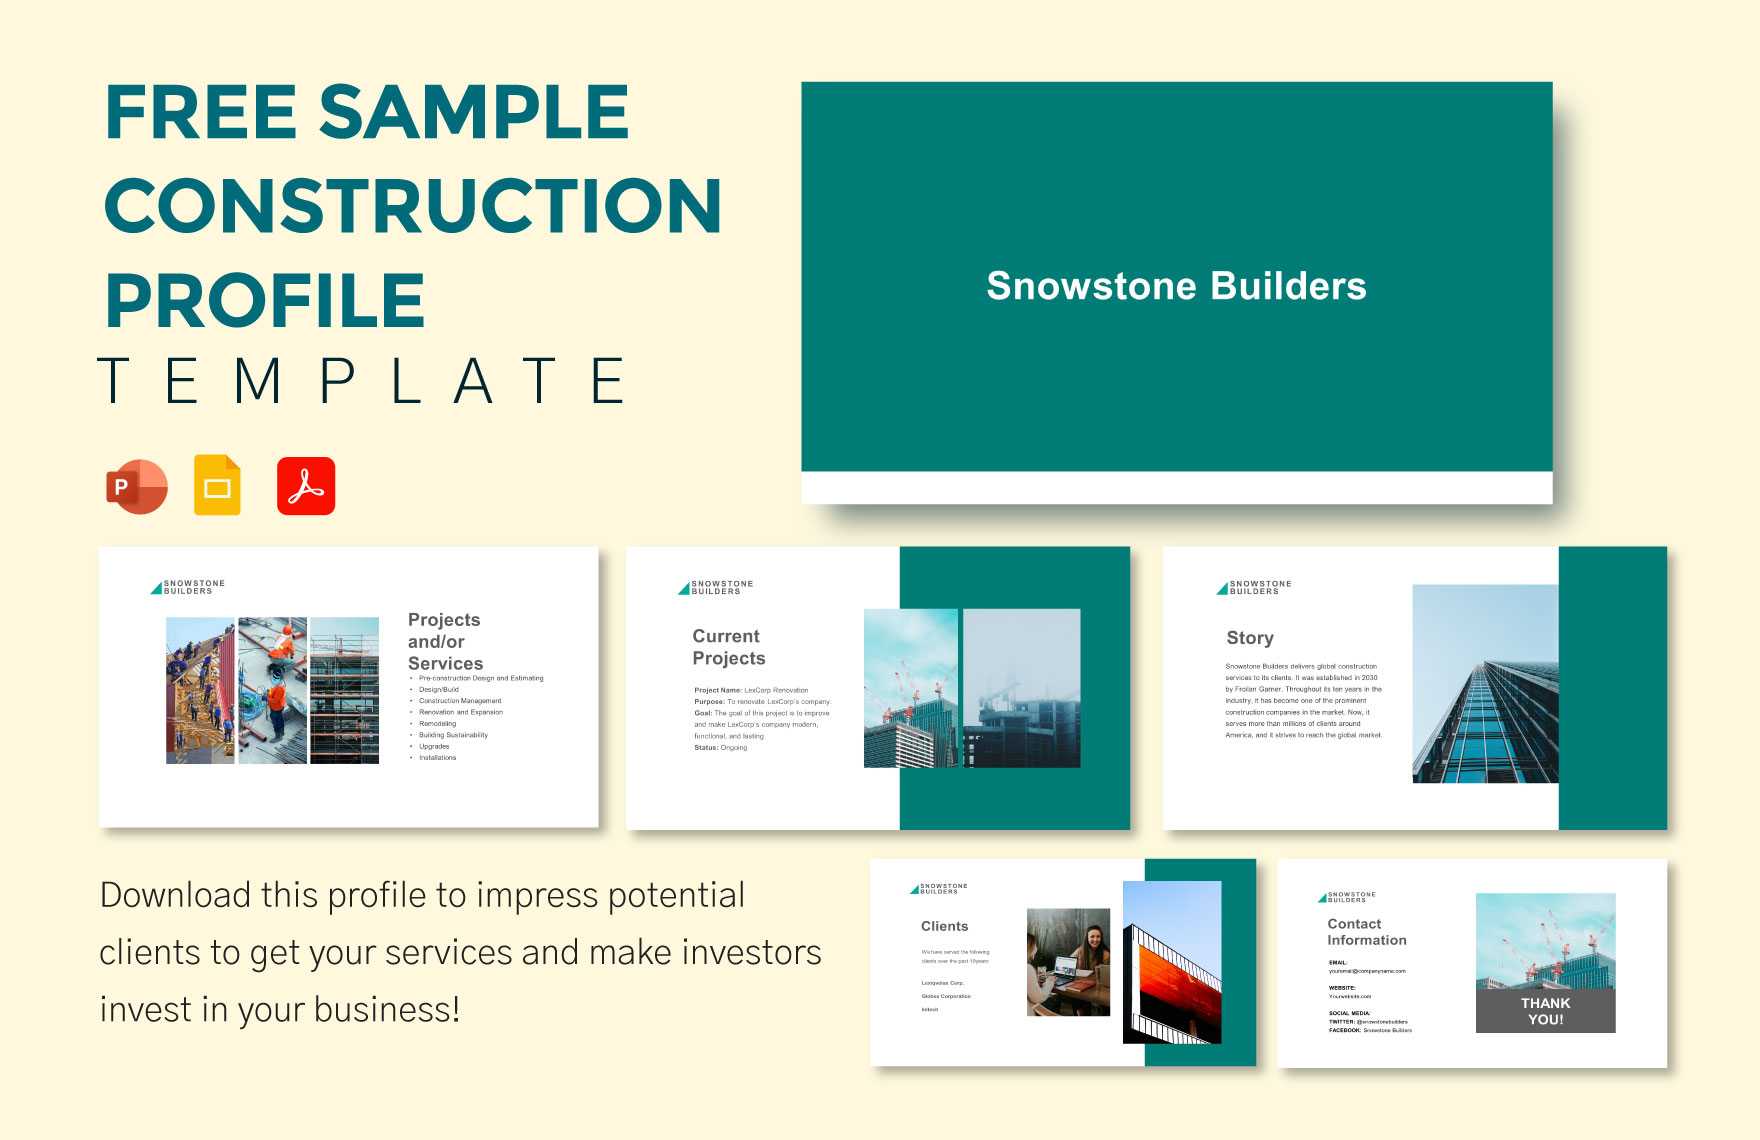 Free Sample Construction Profile Template